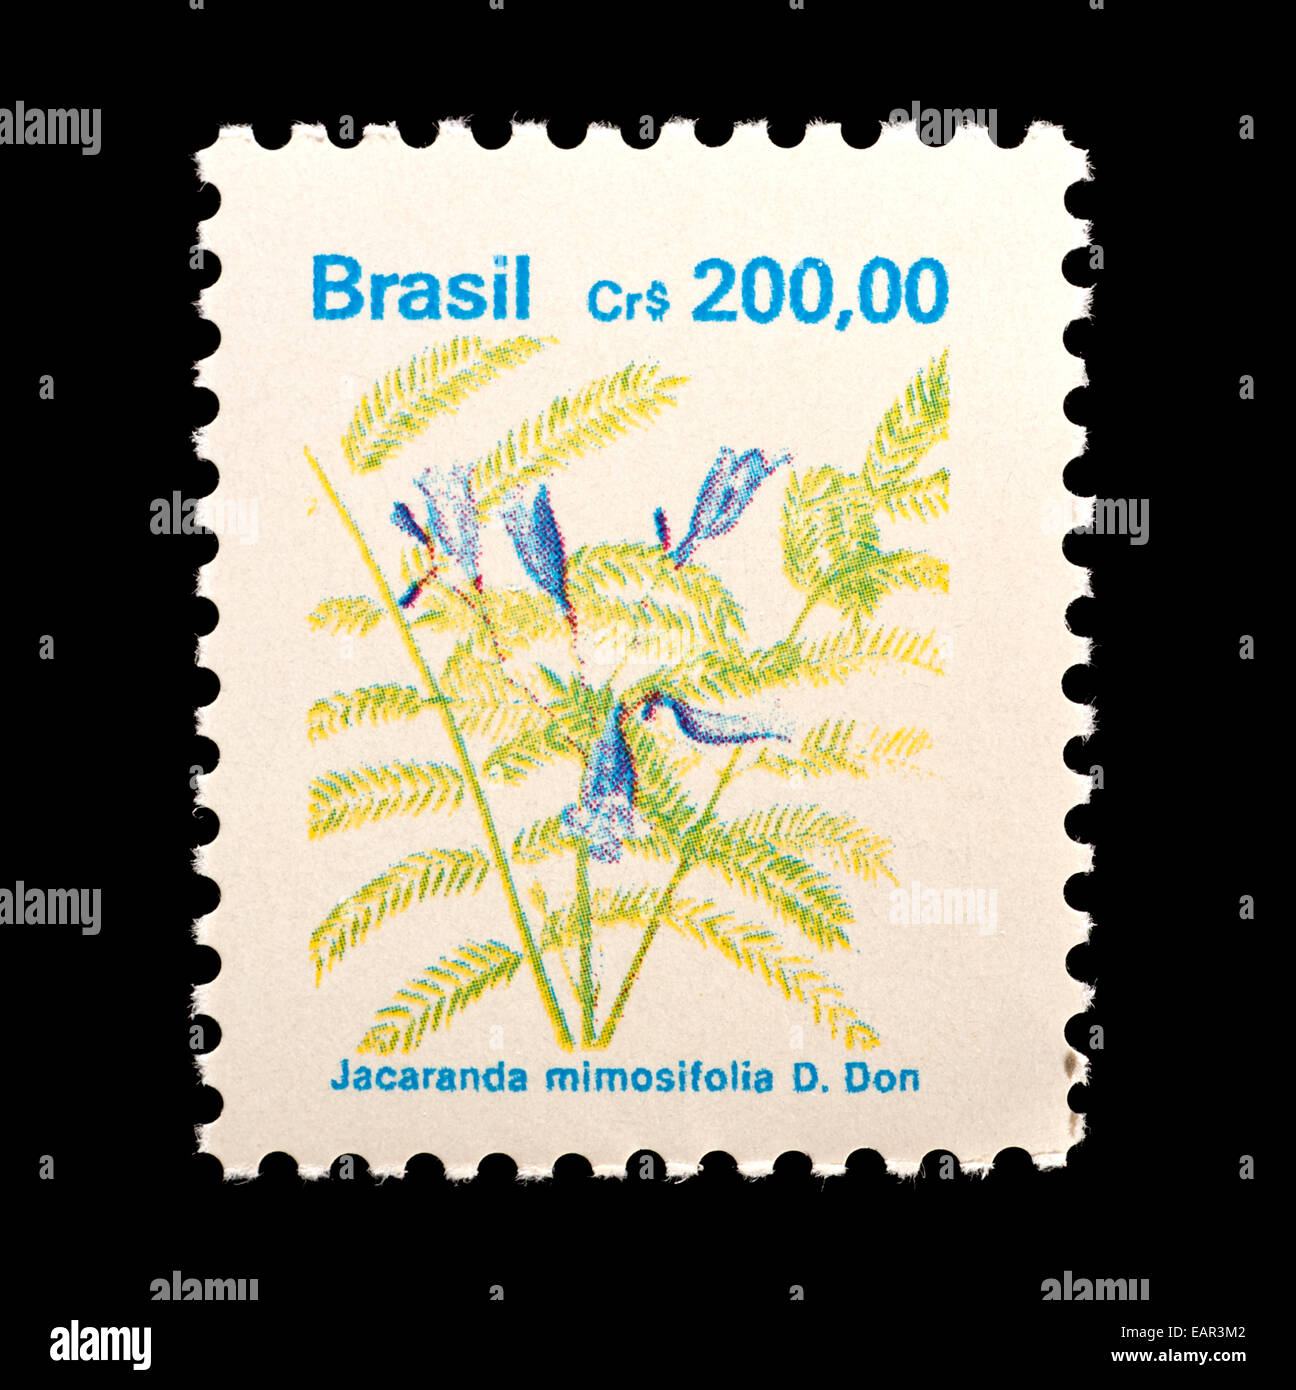 Postage stamp from Brazil depicting Jacaranda flowers (Jacaranda mimosifolia) Stock Photo